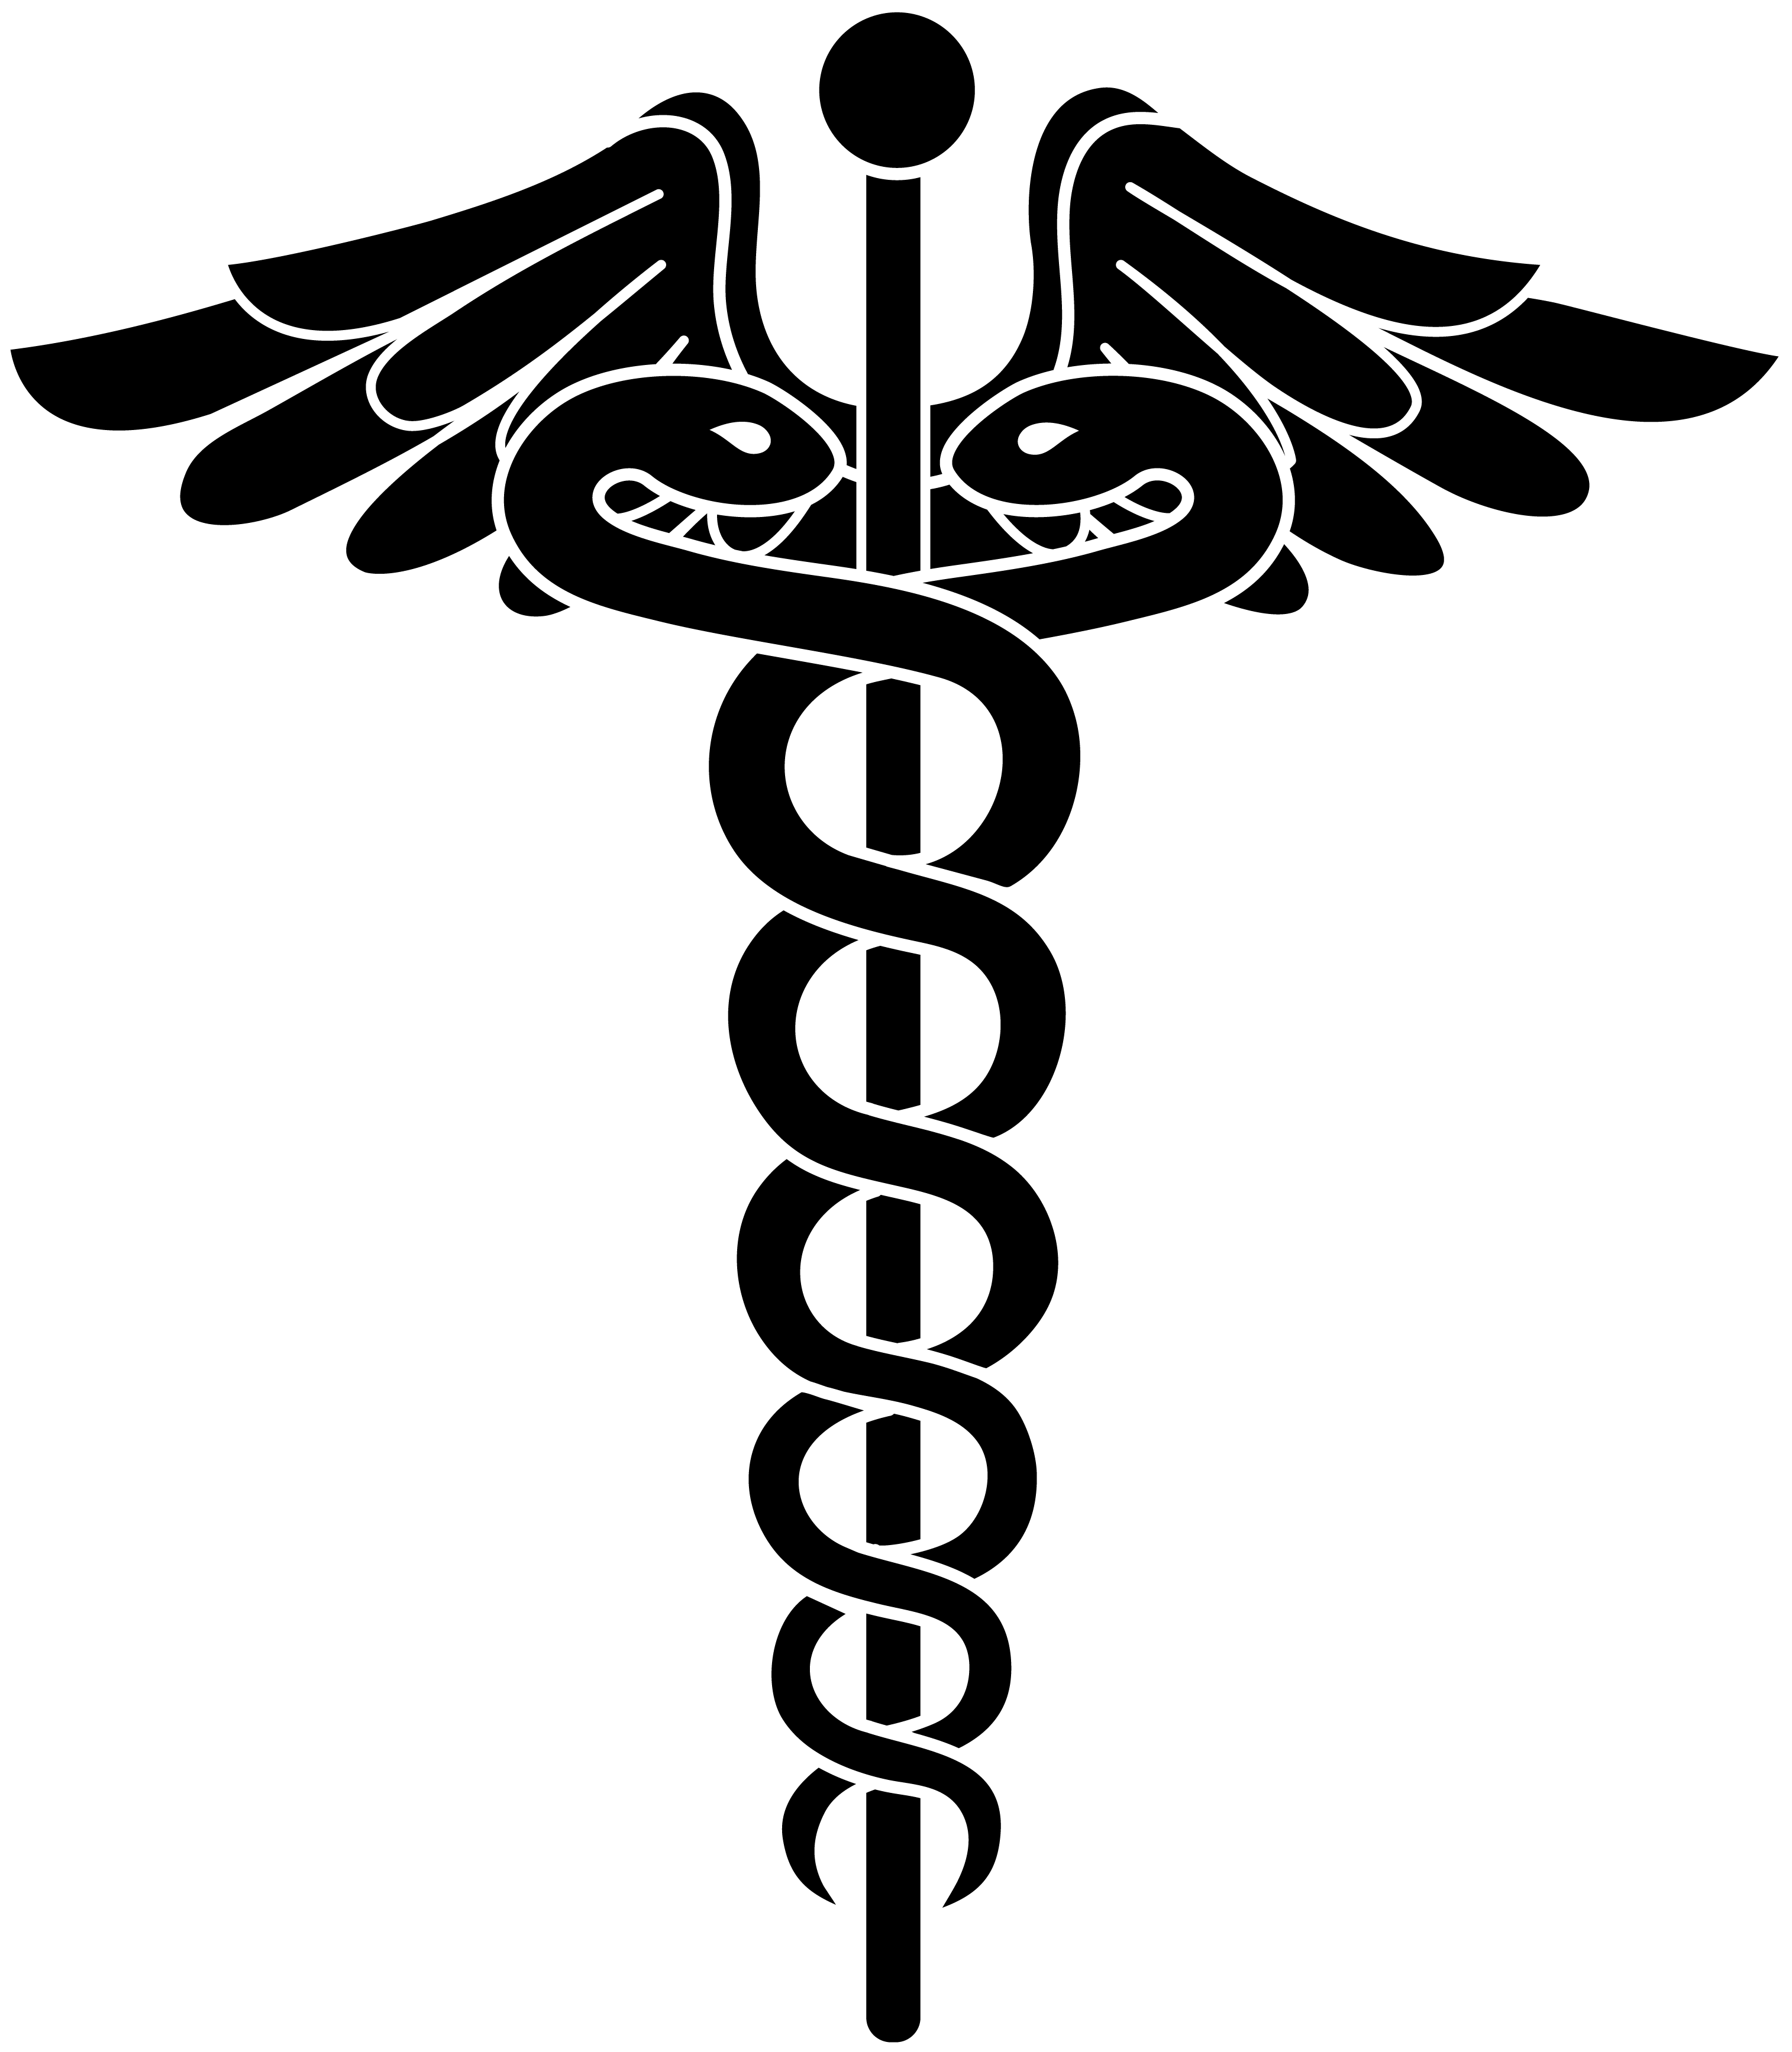 Doctors Logo Images   Physicians Logos Wallpaper